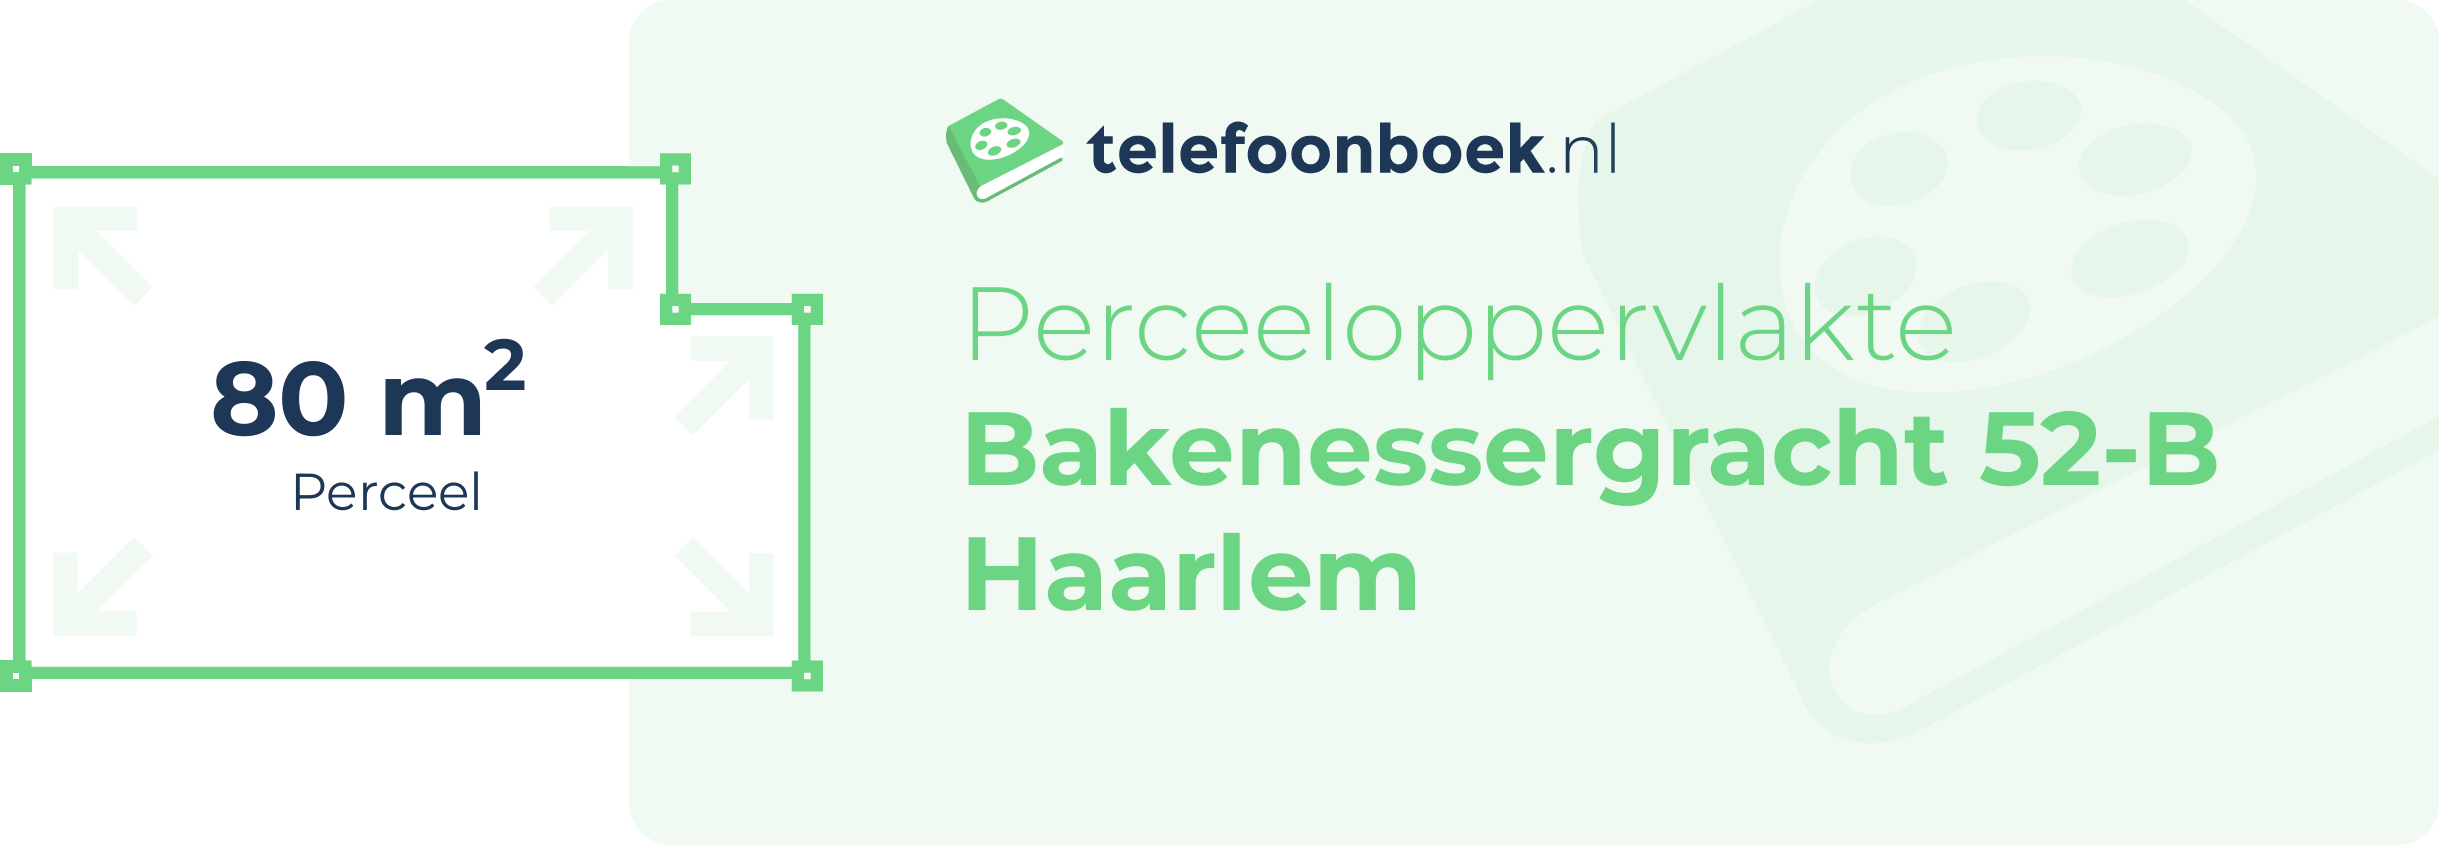 Perceeloppervlakte Bakenessergracht 52-B Haarlem